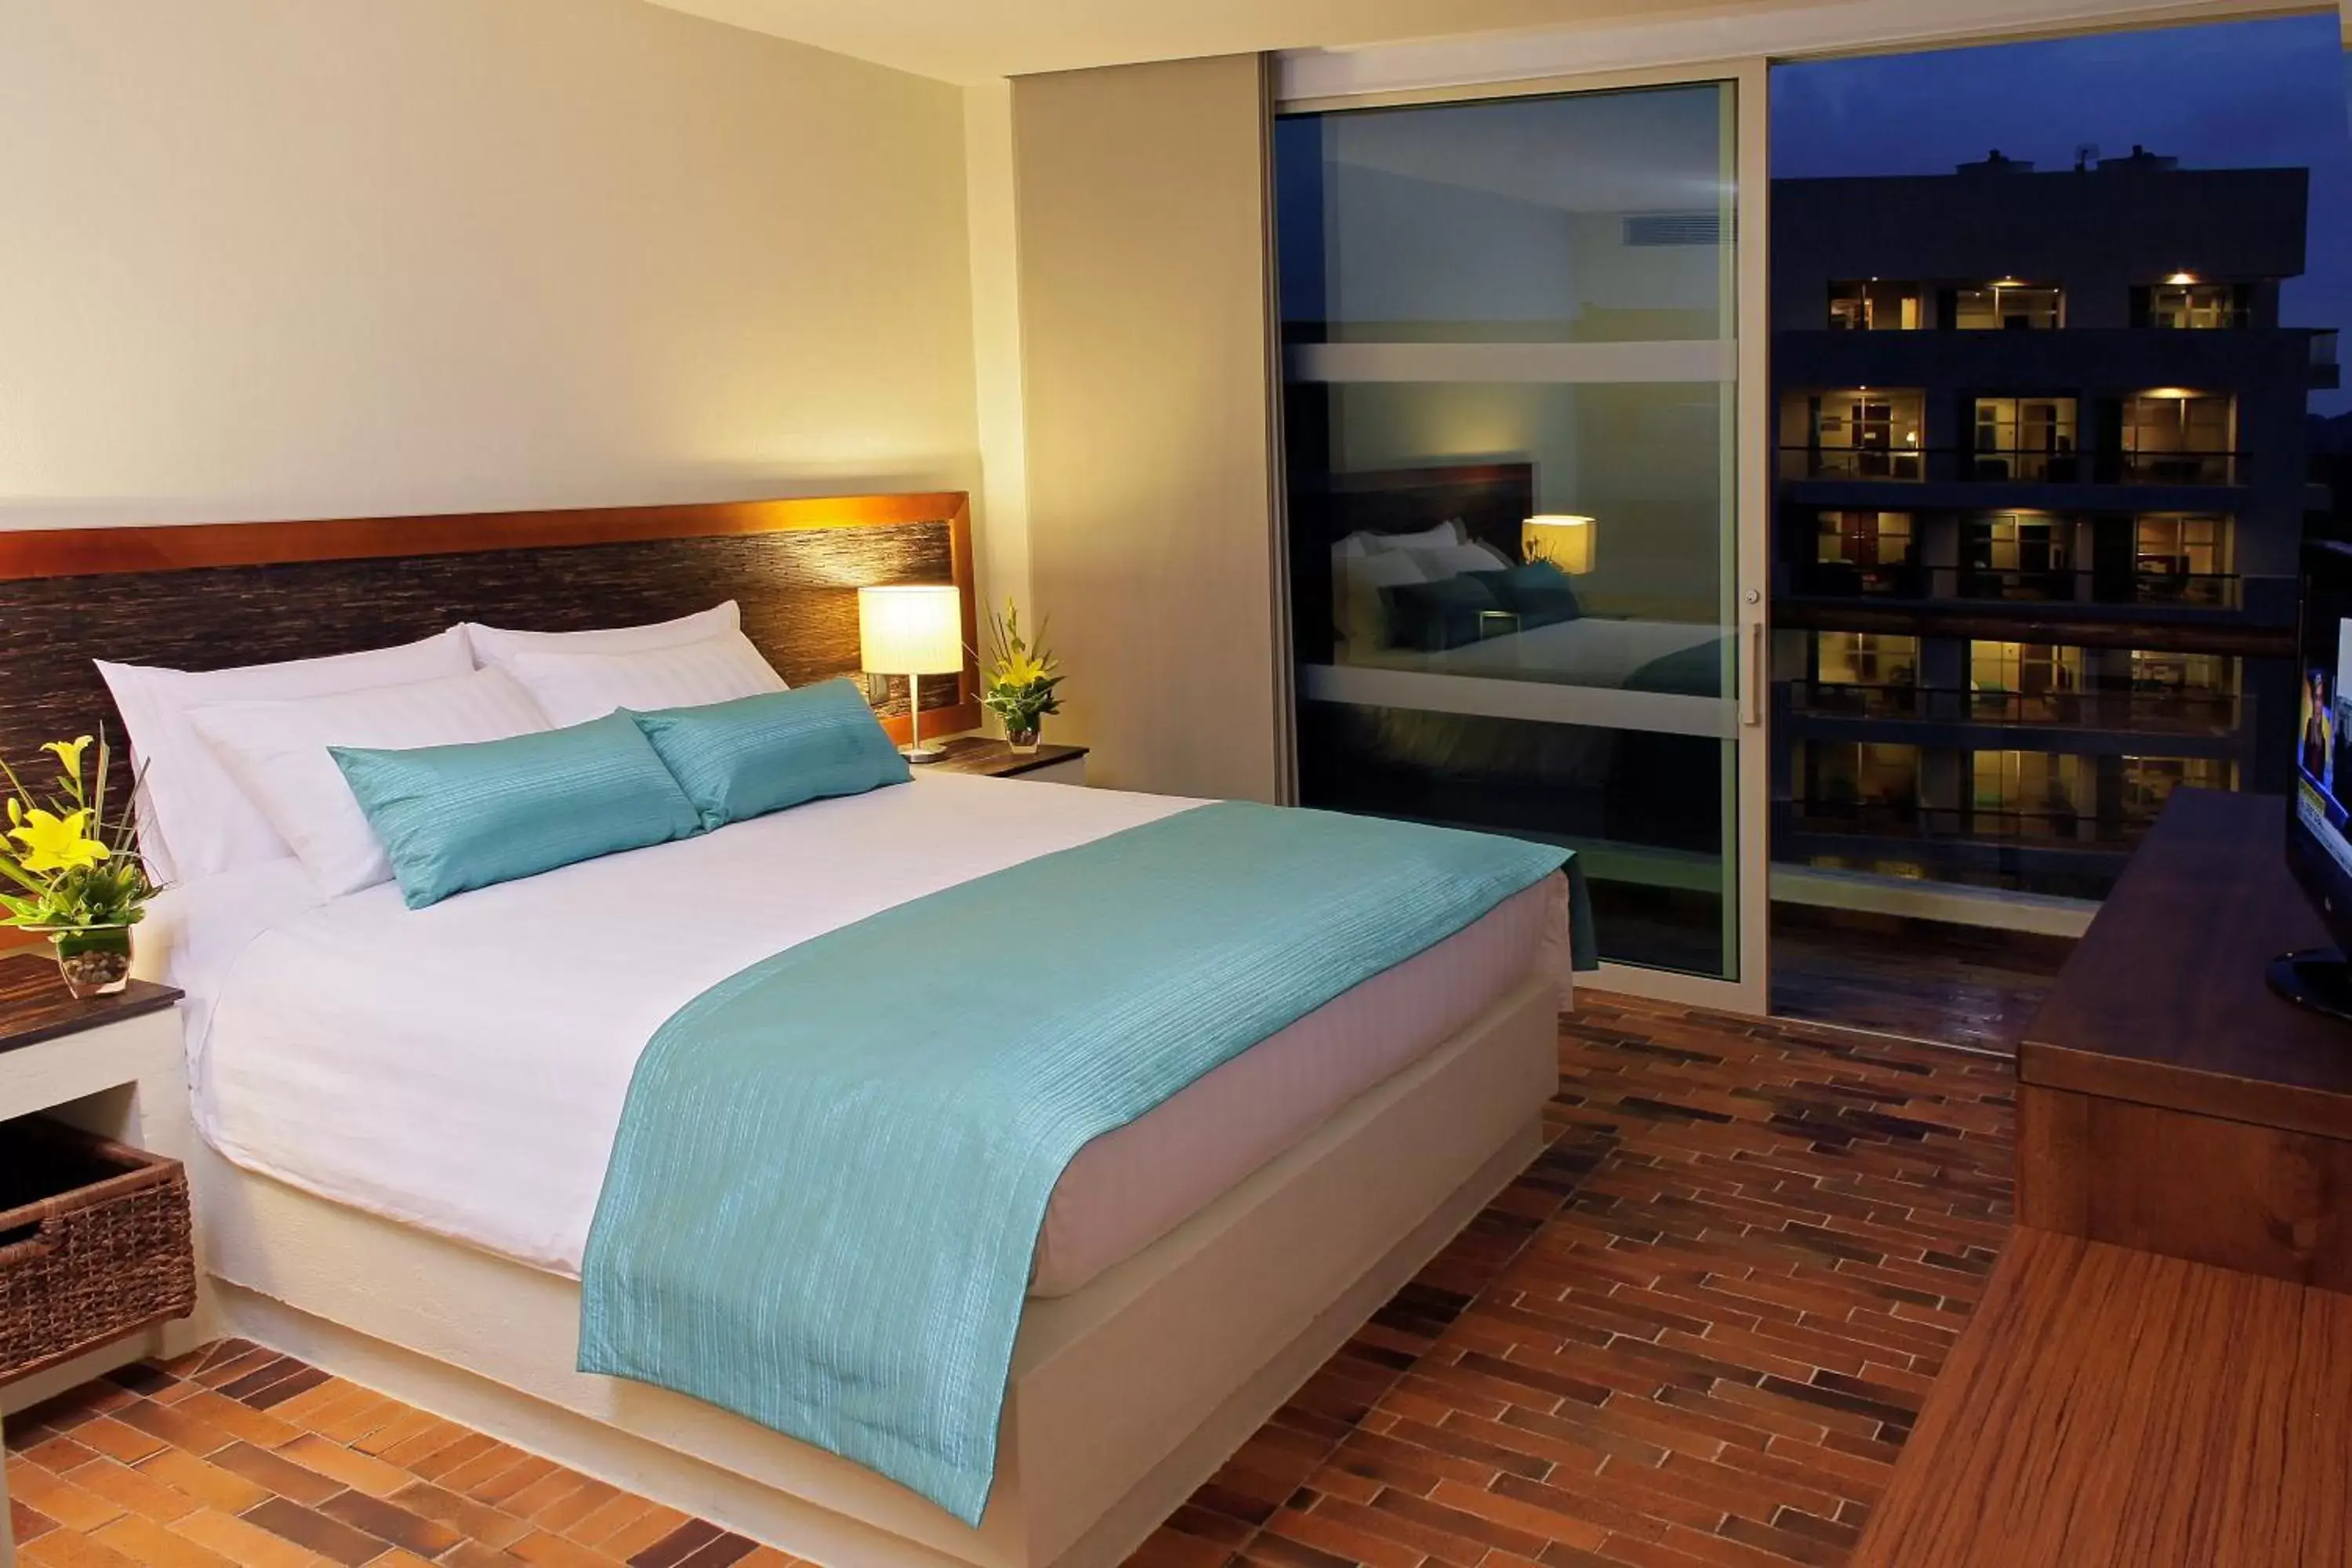 Night, Room Photo in Estelar Playa Manzanillo - All inclusive